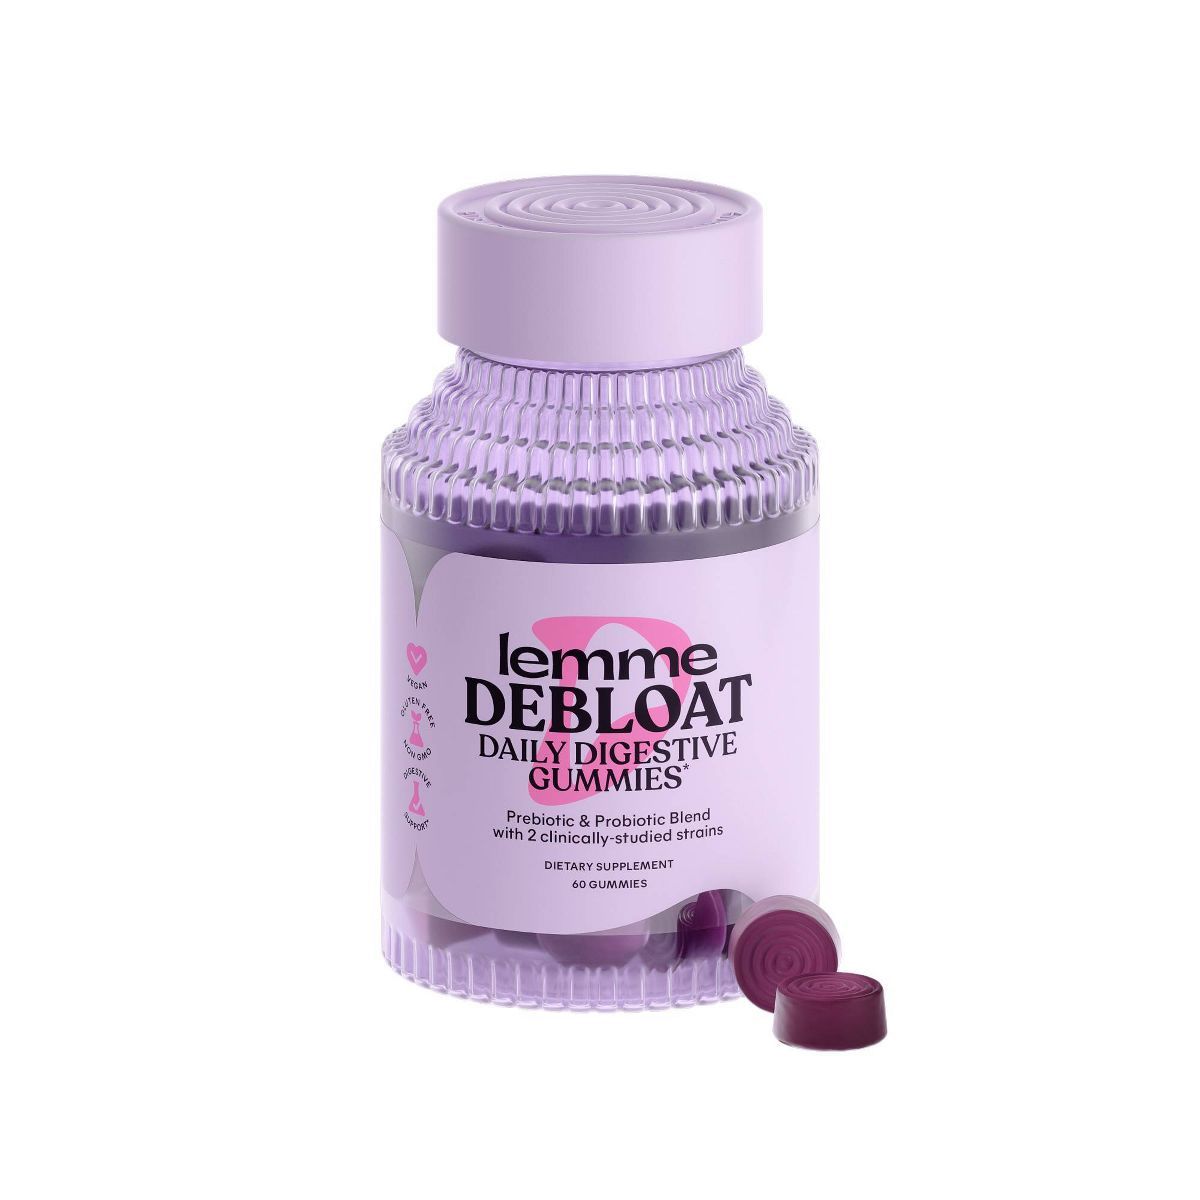 Lemme Debloat Daily Digestive Probiotic Vegan Gummies - 60ct | Target